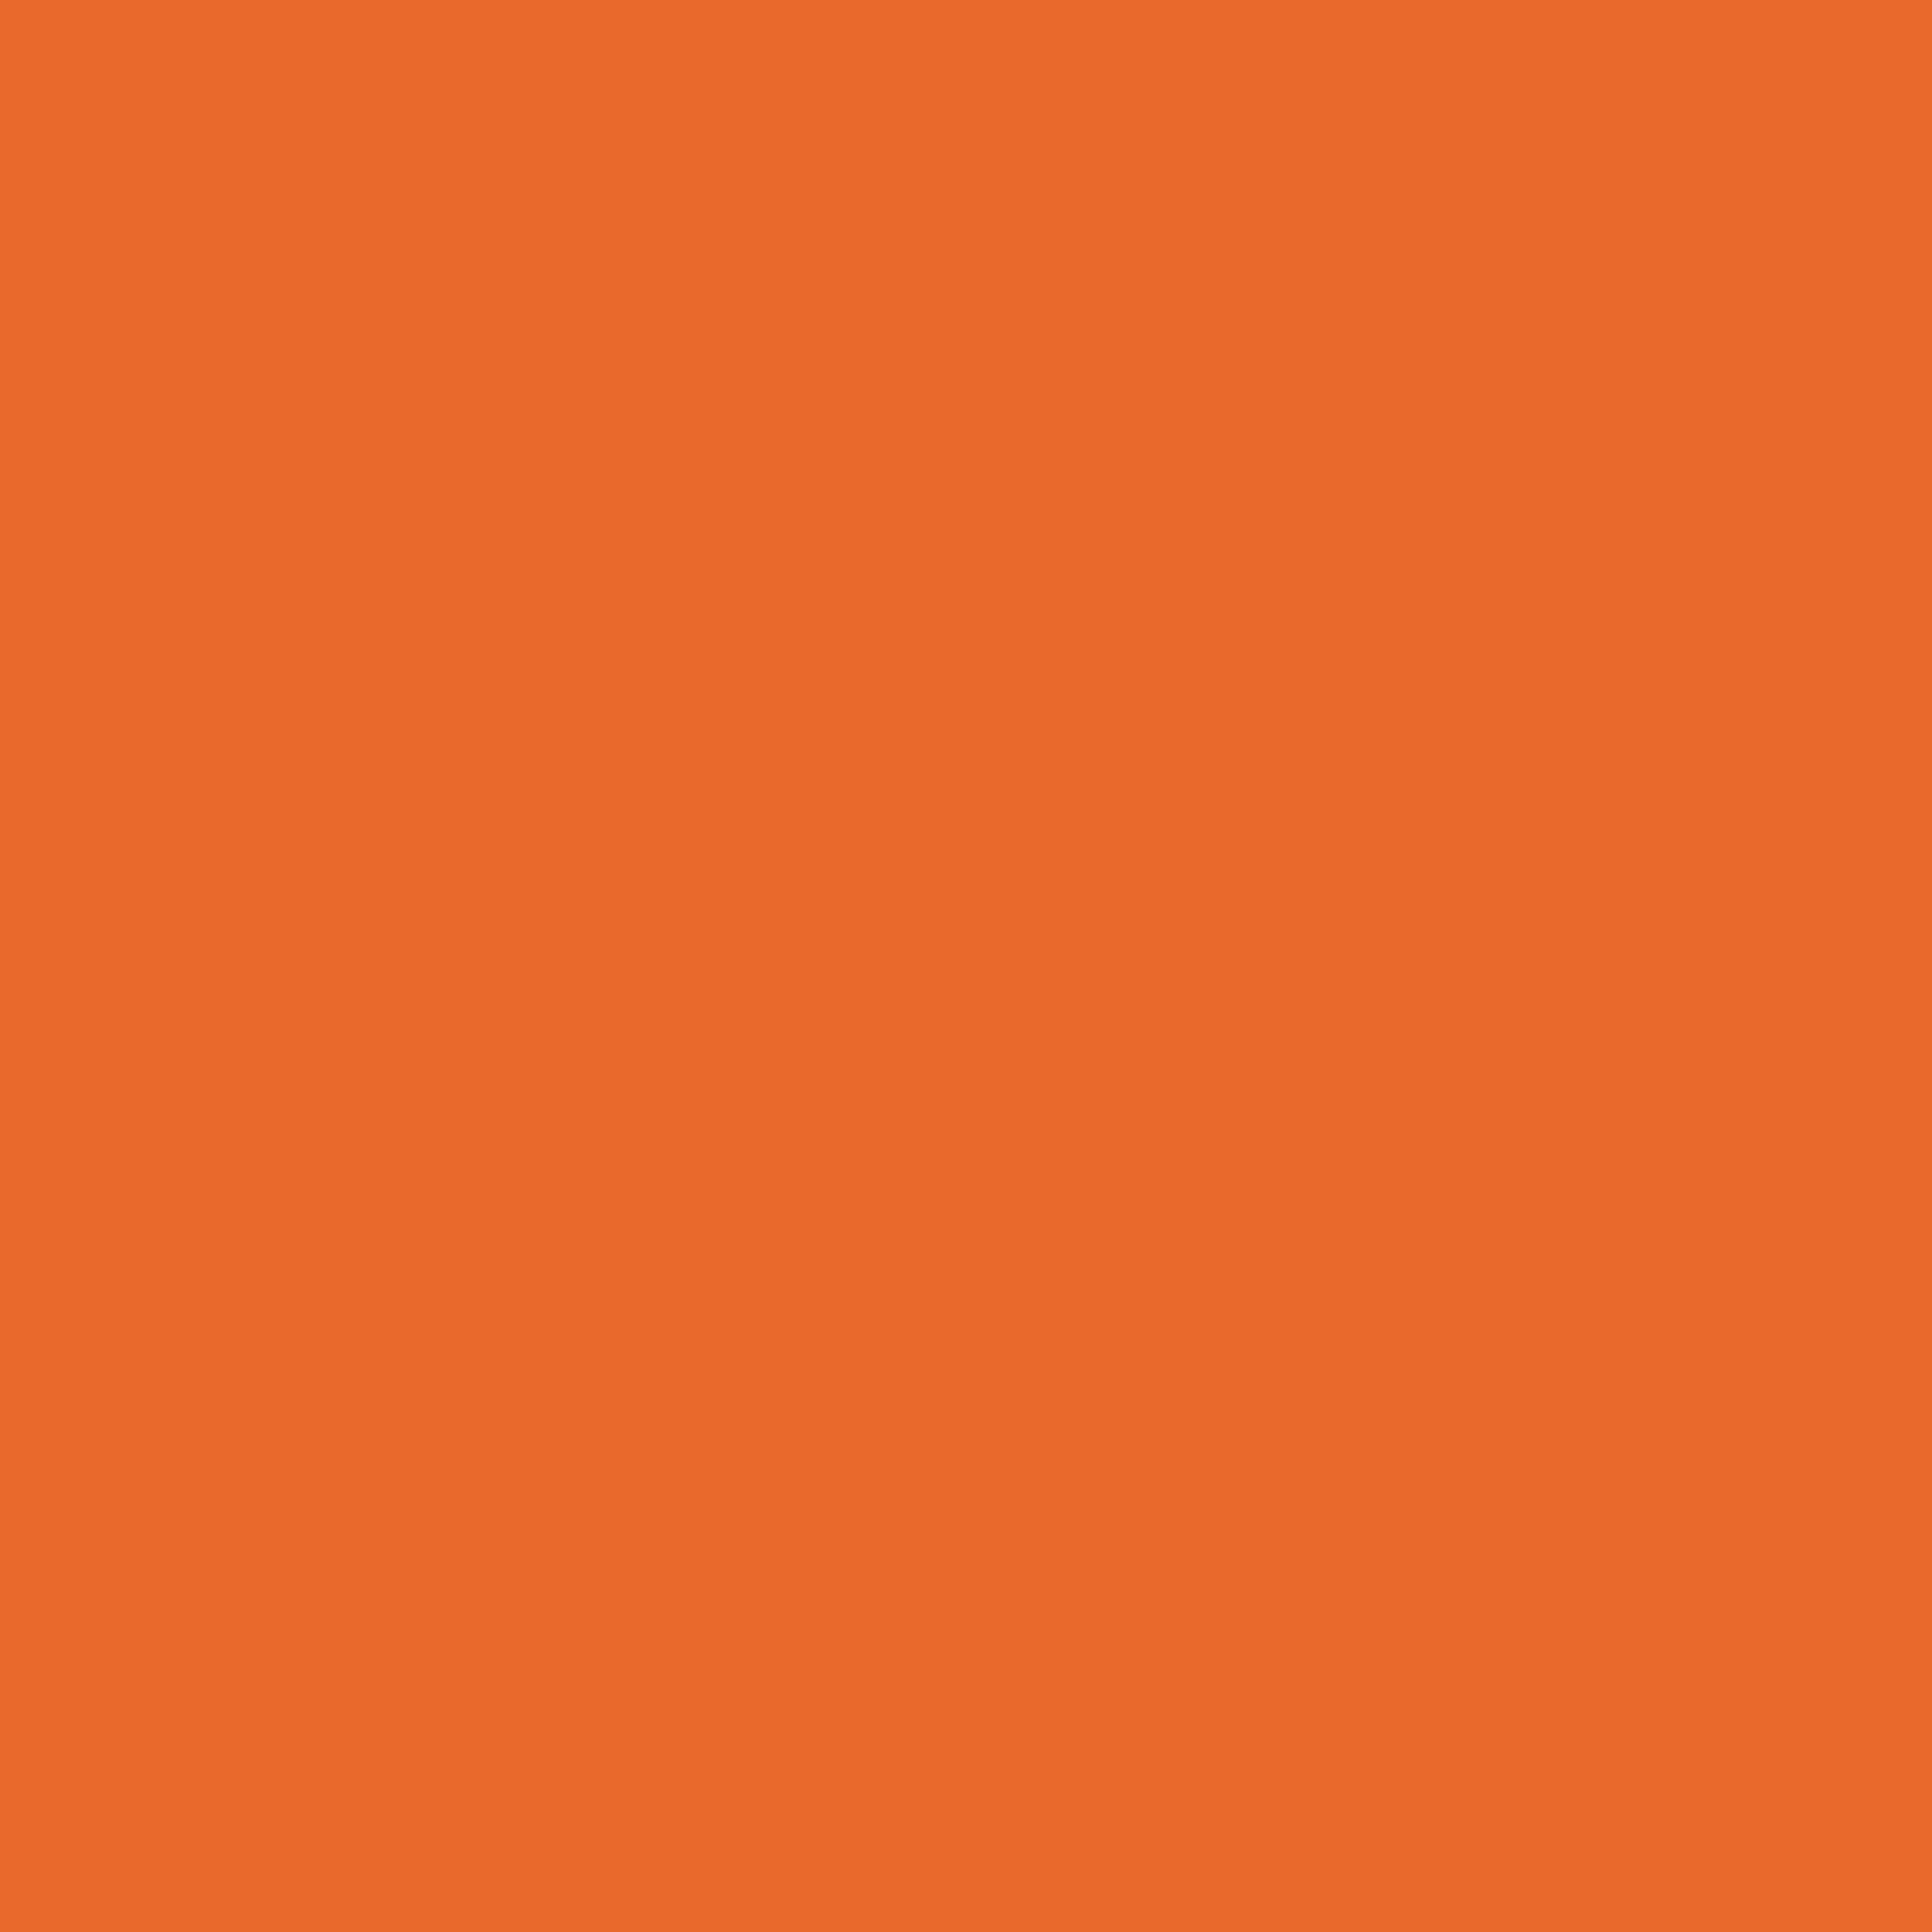 3600x3600 Deep Carrot Orange Solid Color Background